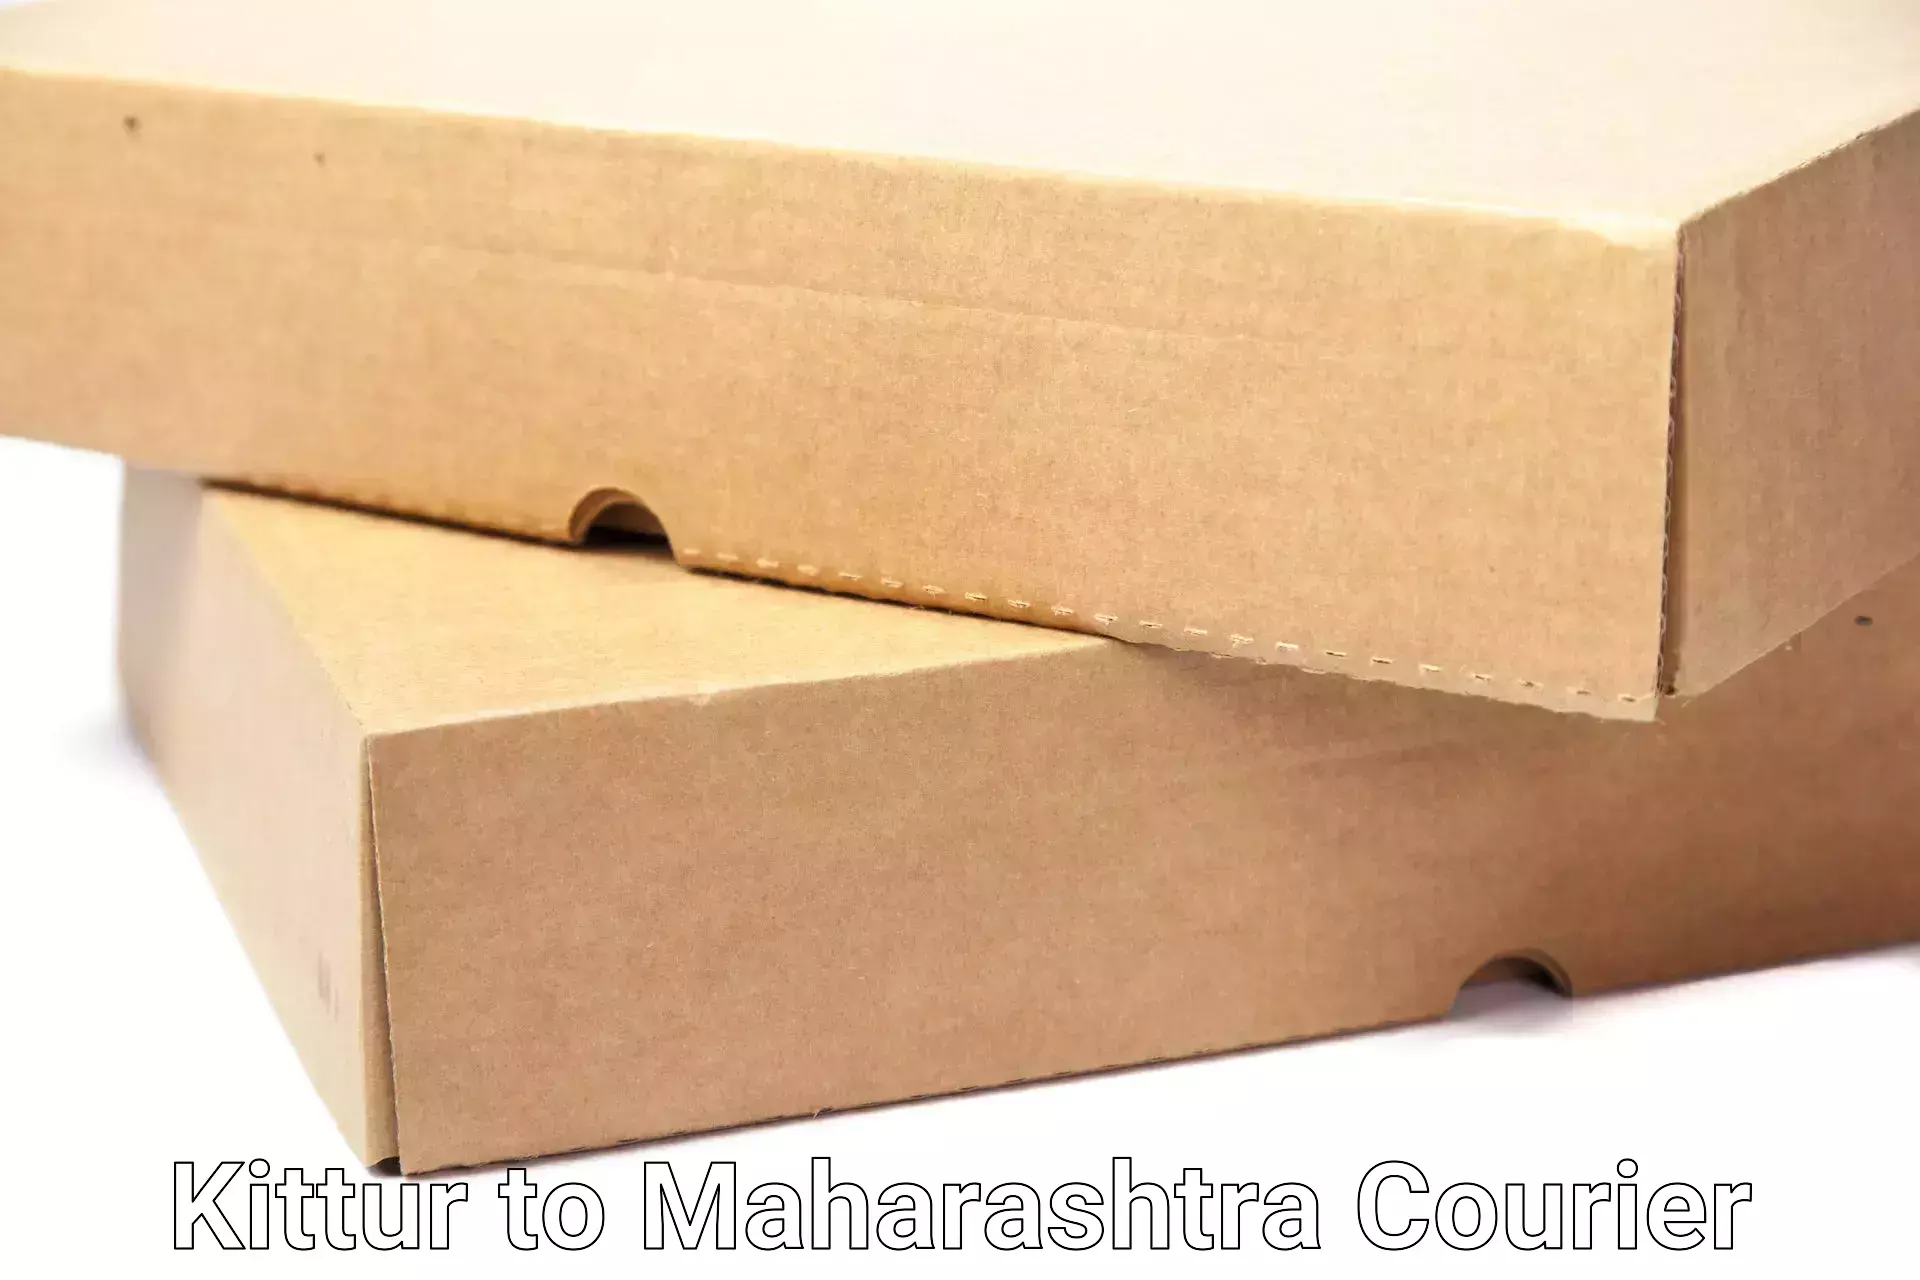 Residential moving experts Kittur to Maharashtra